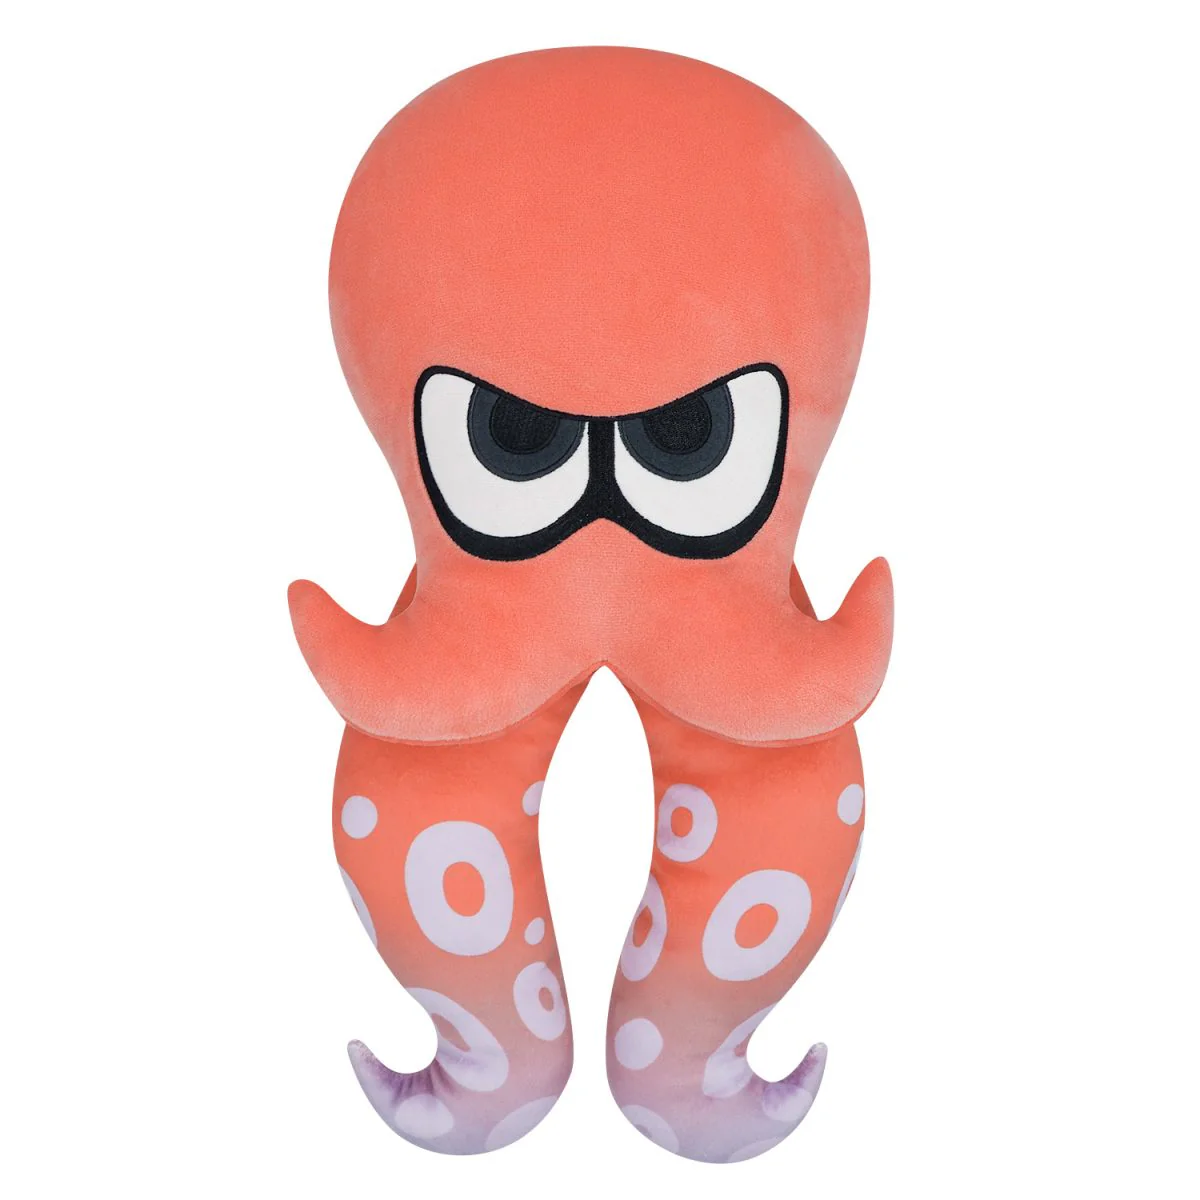 Little Buddy - 16" Red Octoling Octopus Plush (G.Flr)